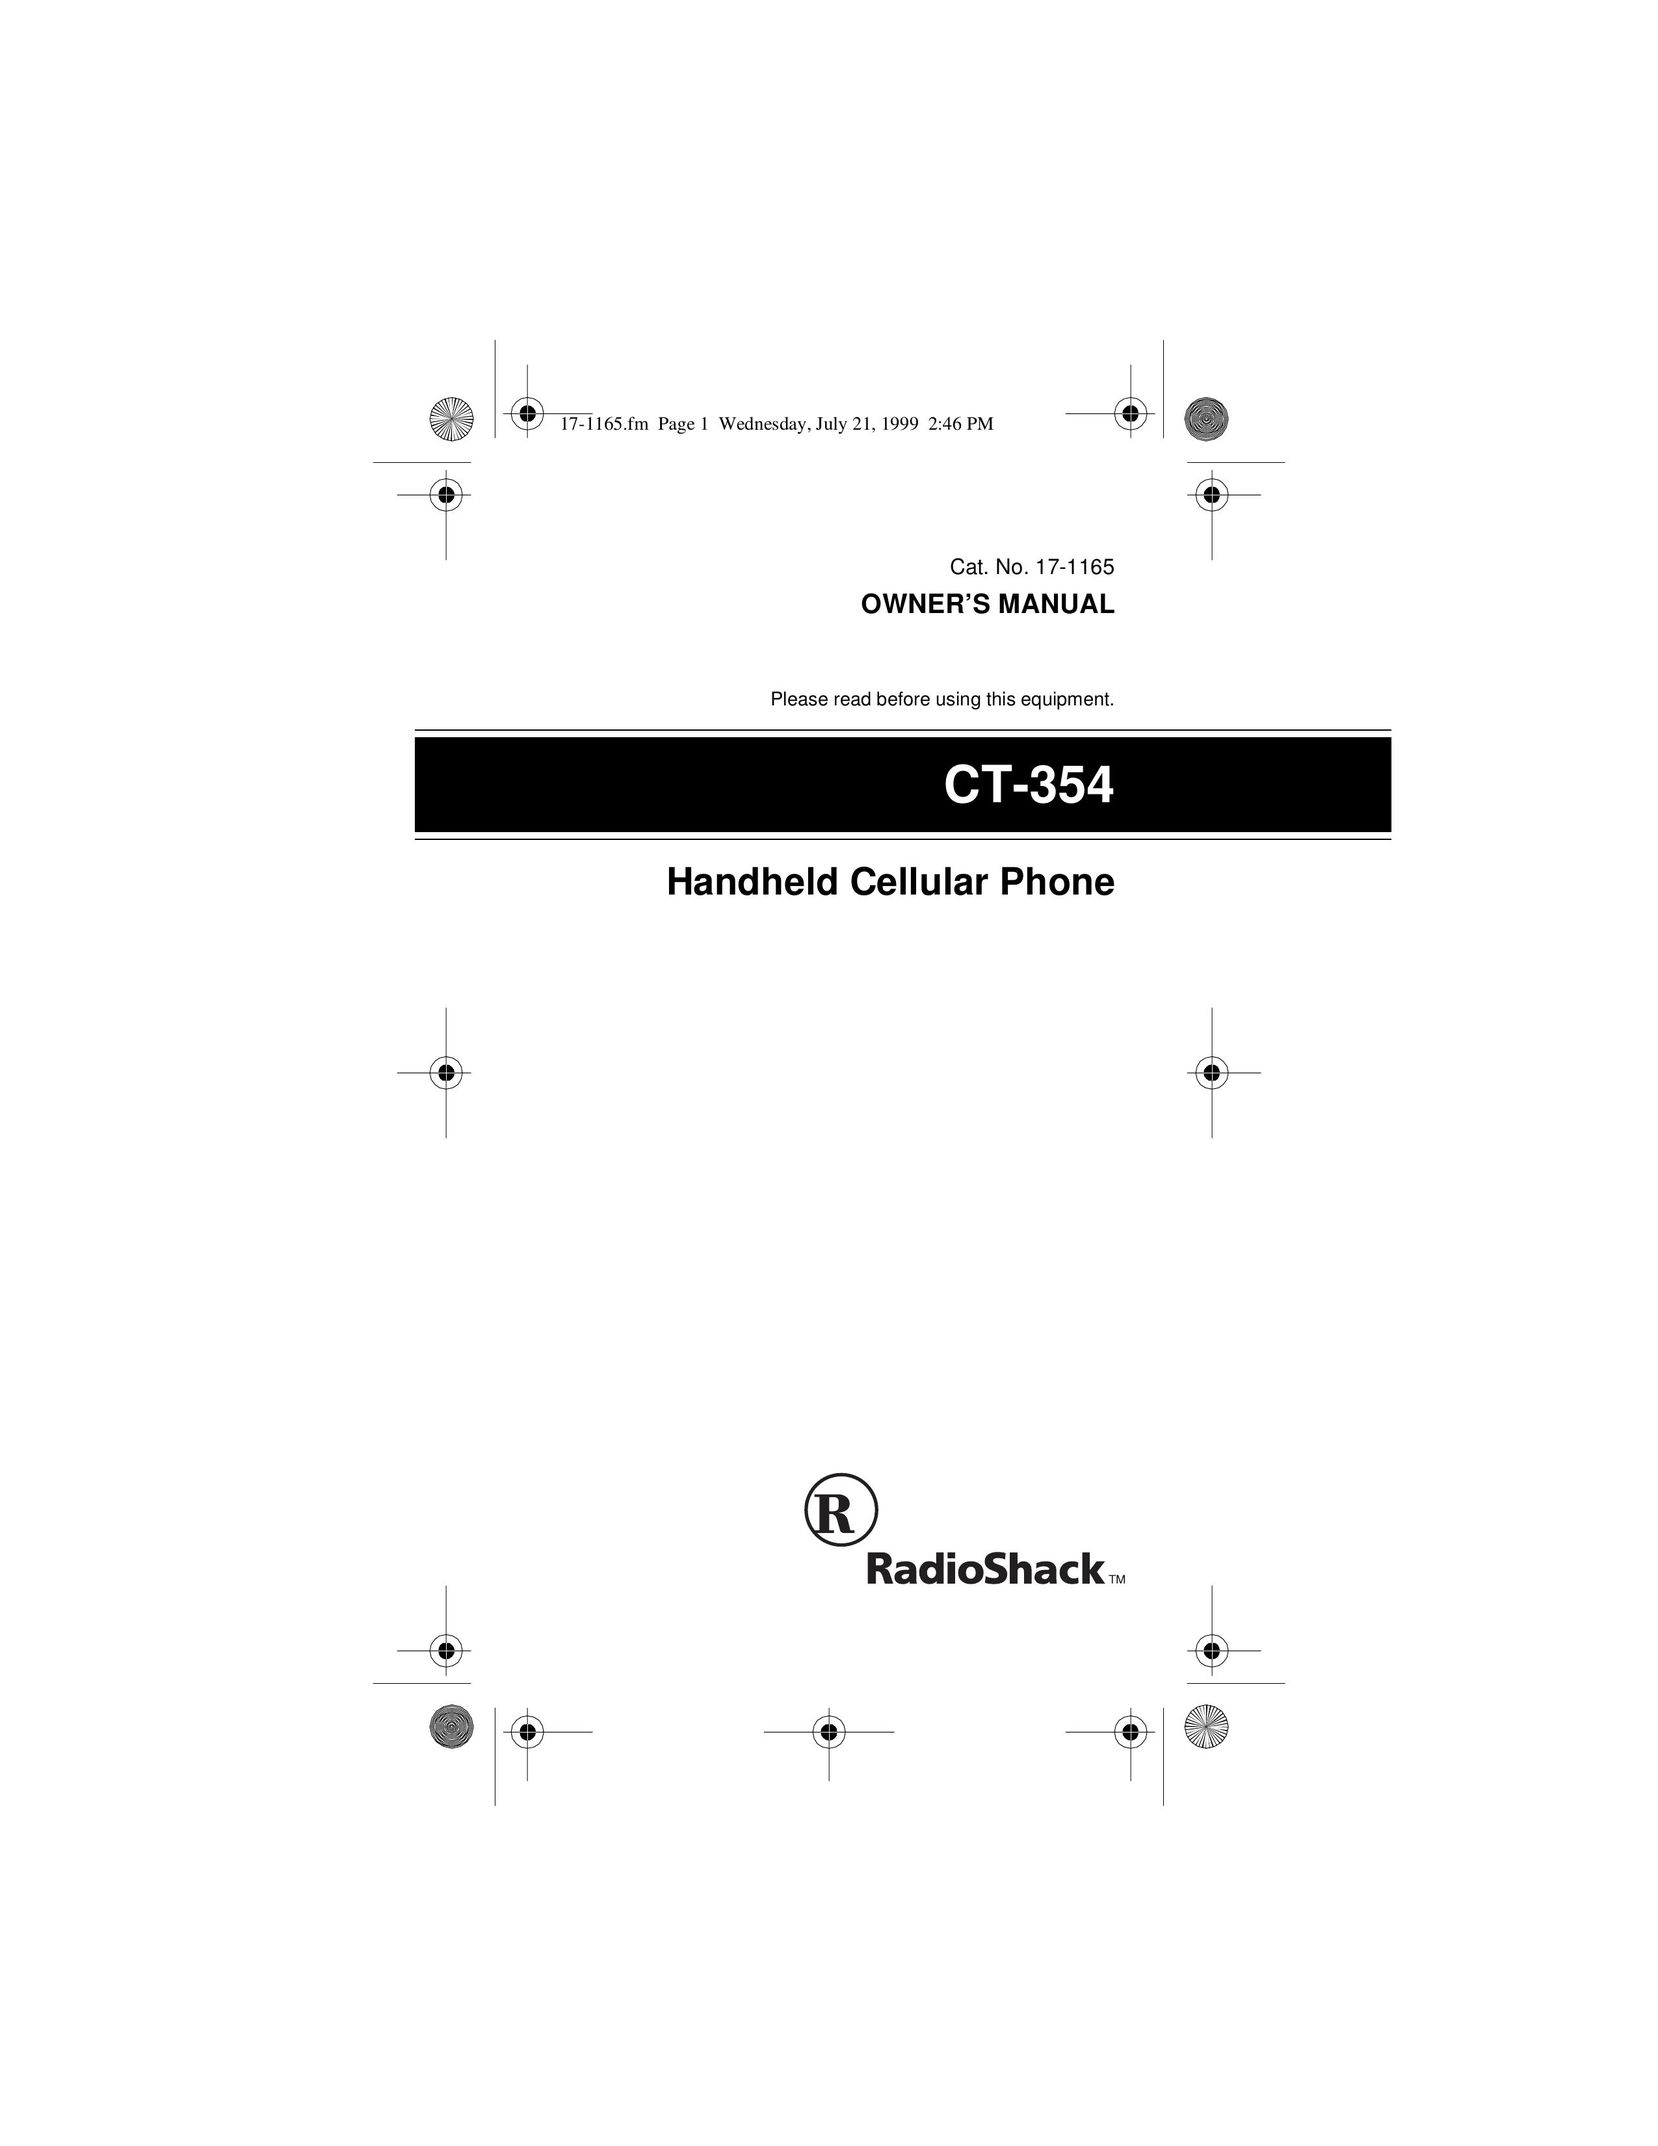 Radio Shack CT-354 Cell Phone User Manual